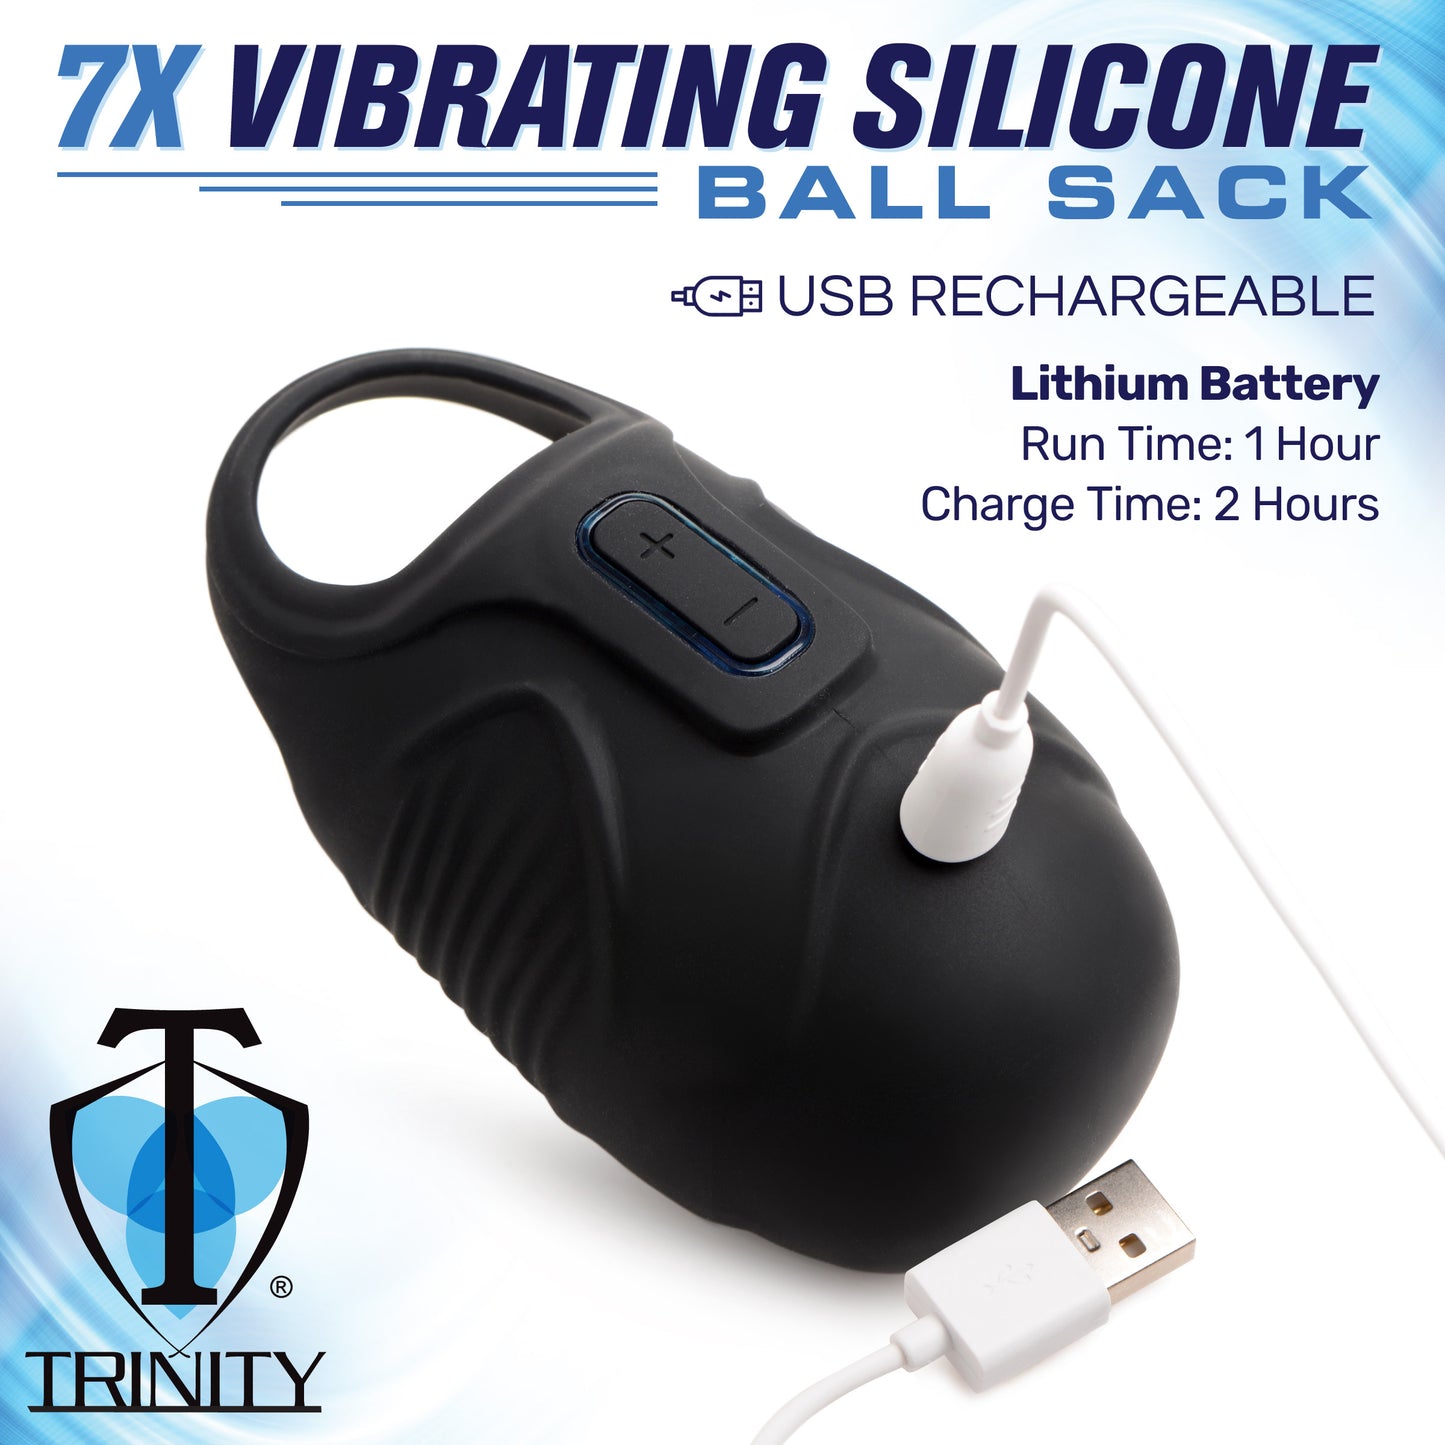 7x Vibrating Silicone Ball Sack